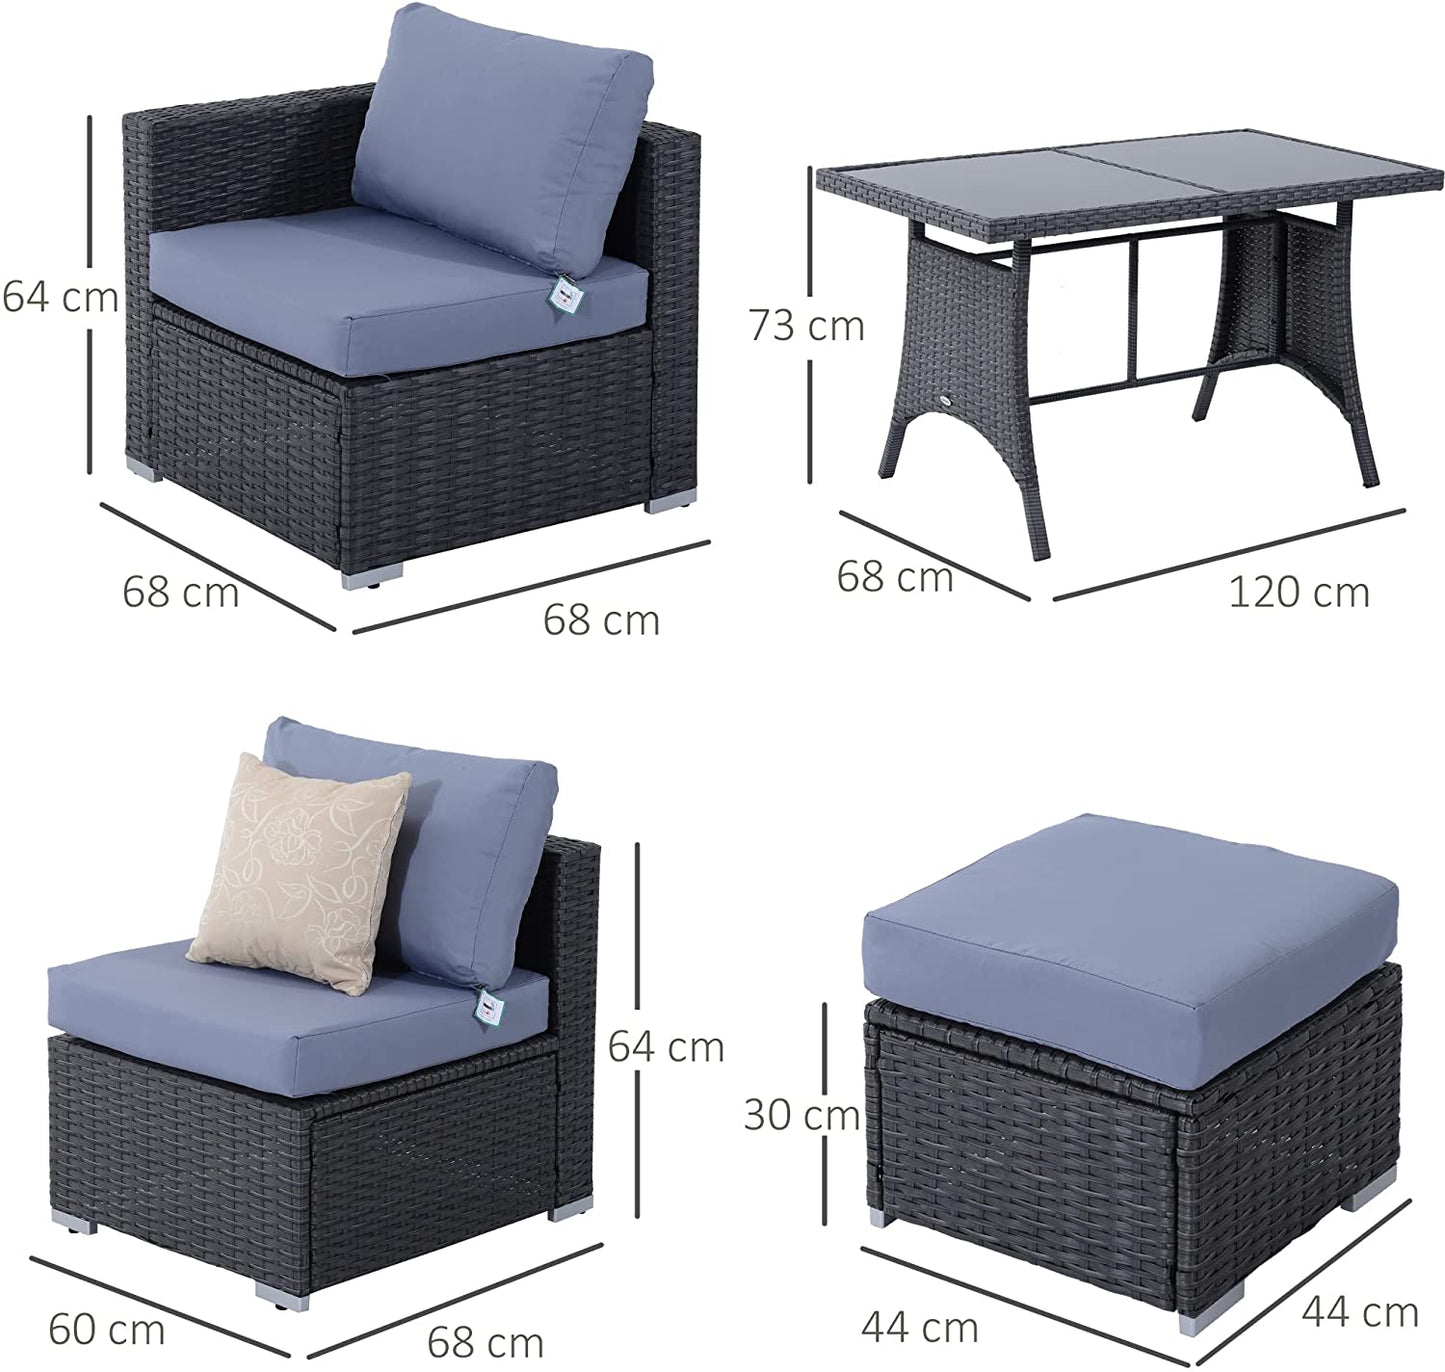 Outsunny 10 Pcs Rattan Sofa Set-Grey/Dusty Blue Cushion